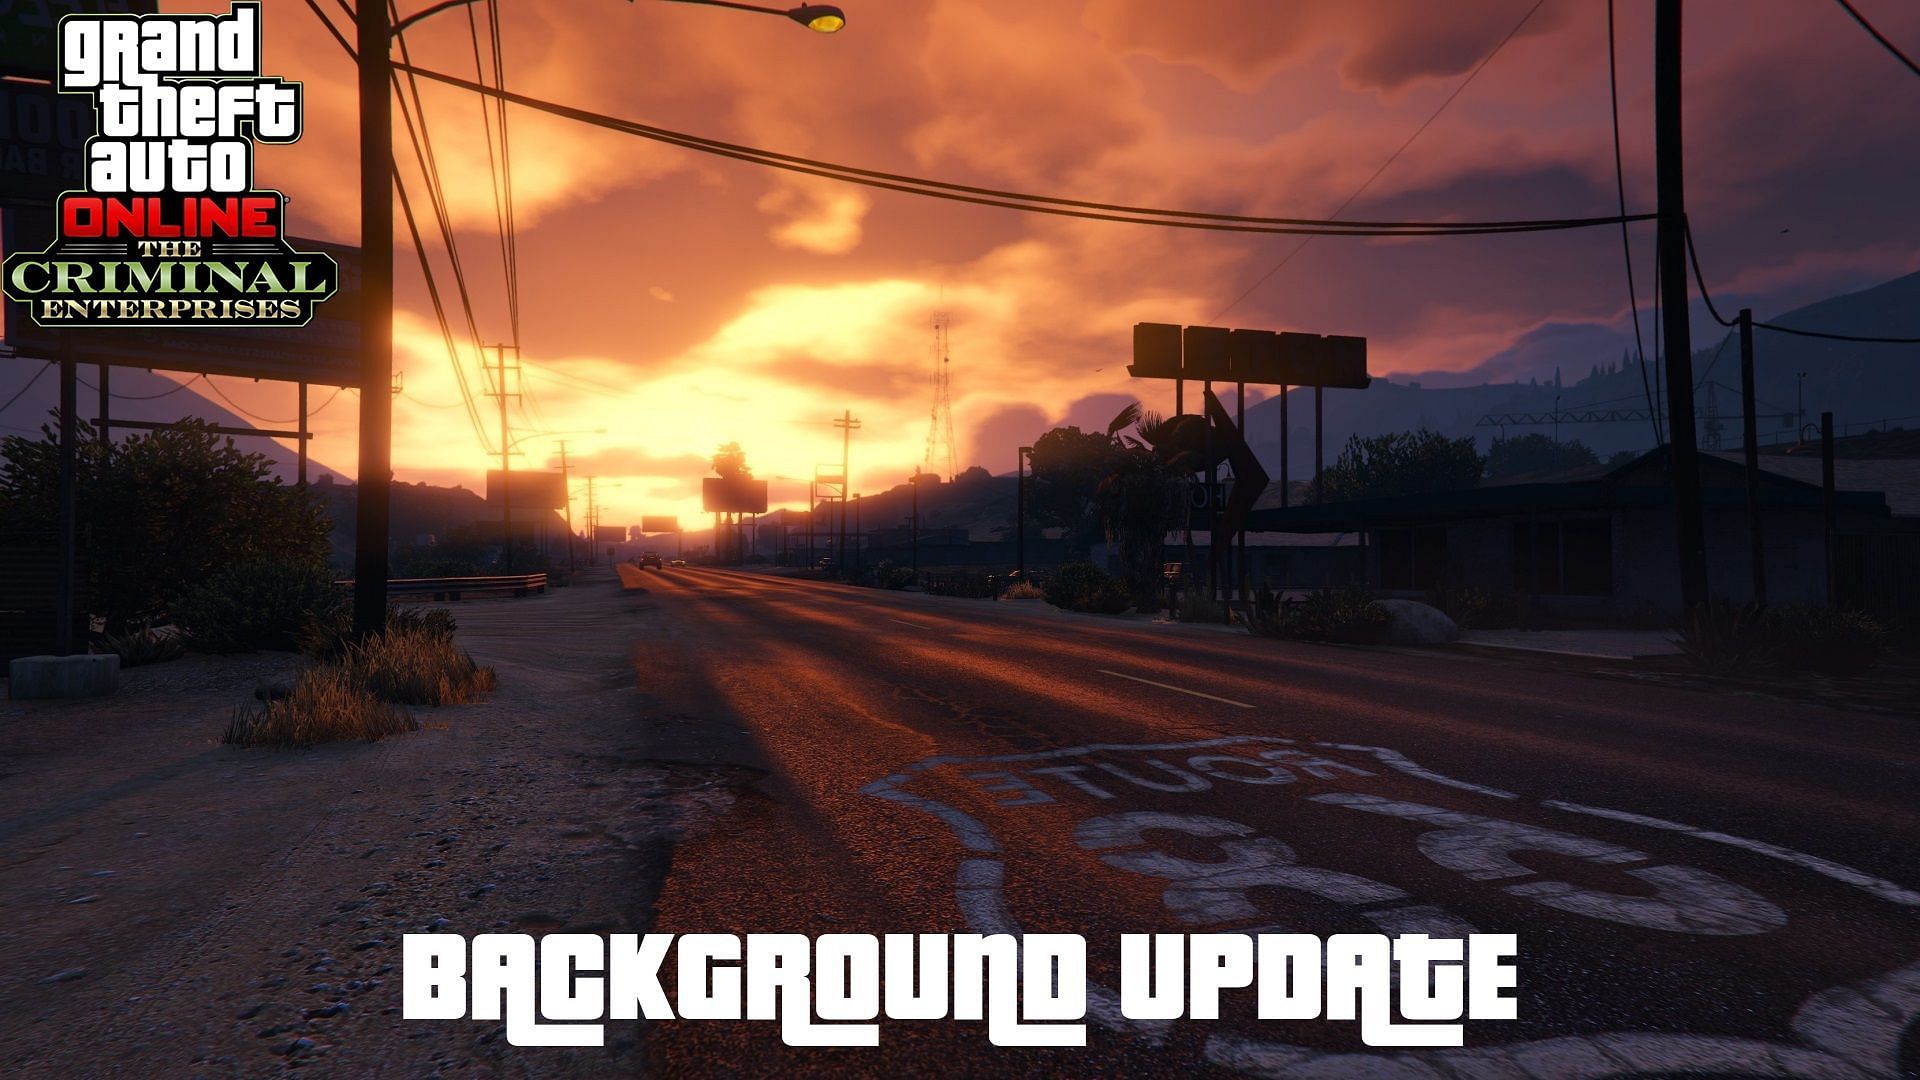 GTA Online background update fixes glitches in summer DLC